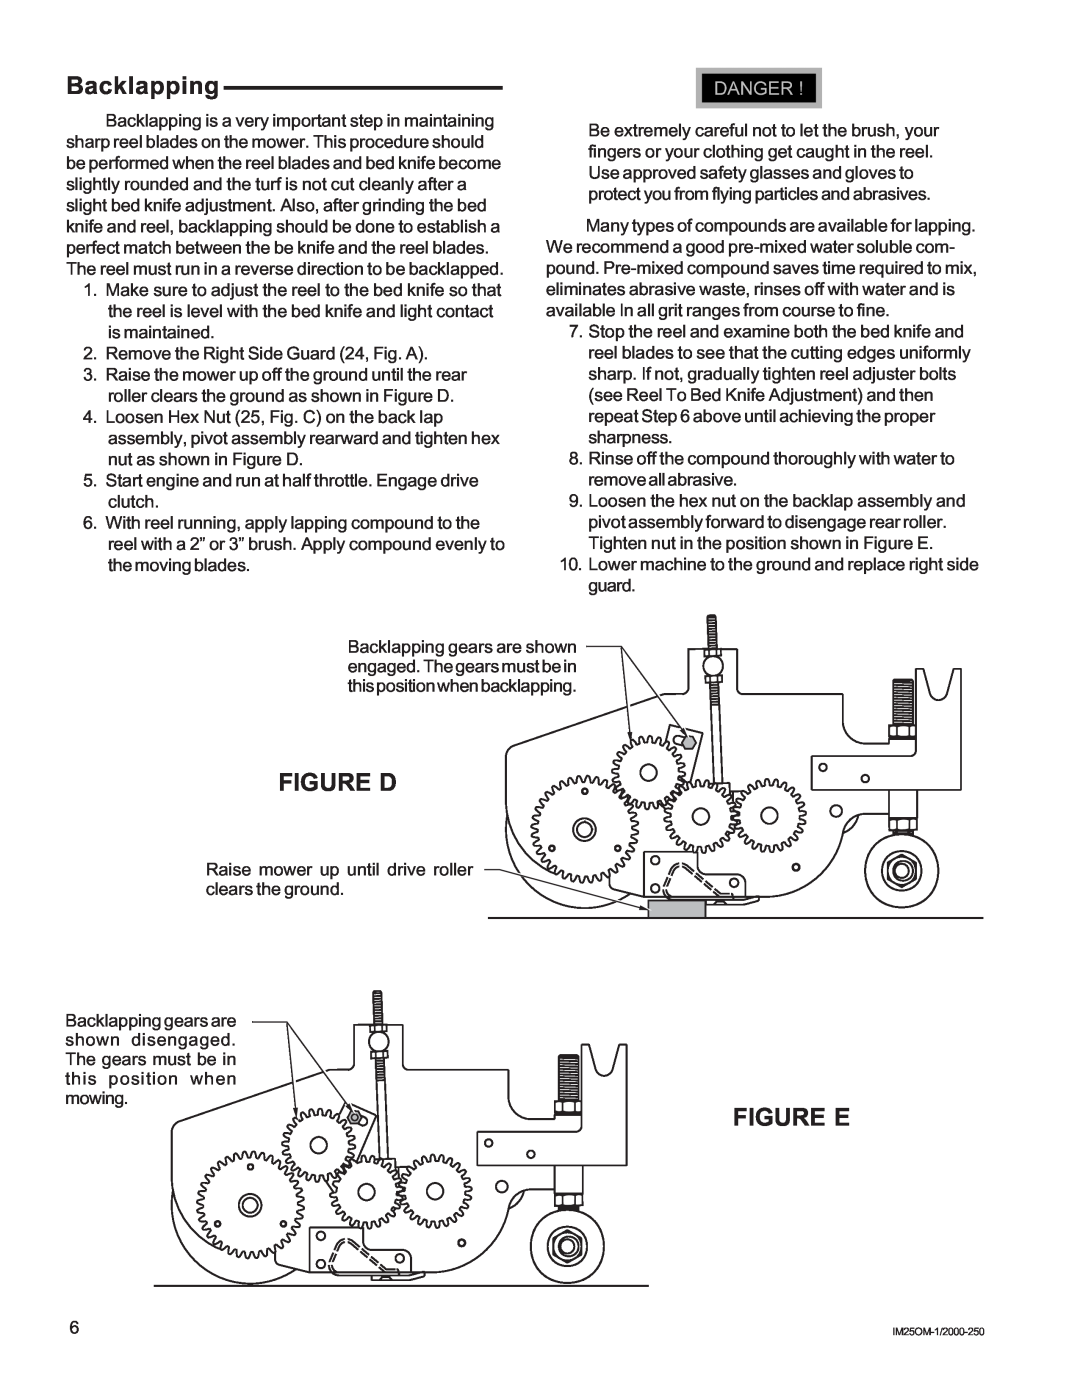 National Mower IM25 manual Backlapping, Figure D, Figure E 